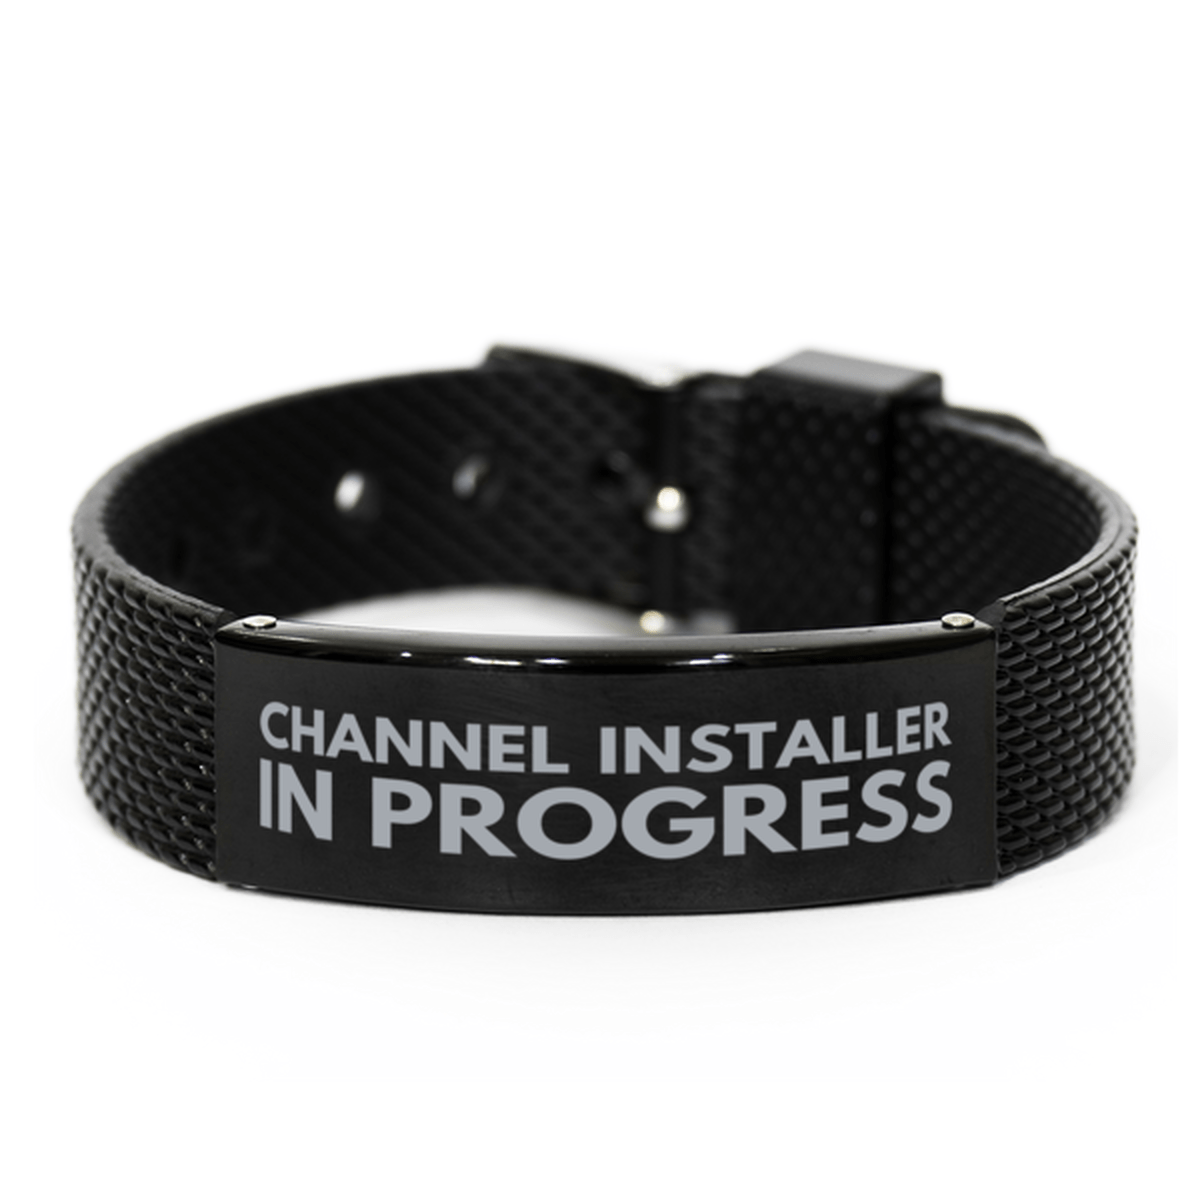 Inspirational Channel Installer Black Shark Mesh Bracelet, Channel Installer In Progress, Best Graduation Gifts for Students